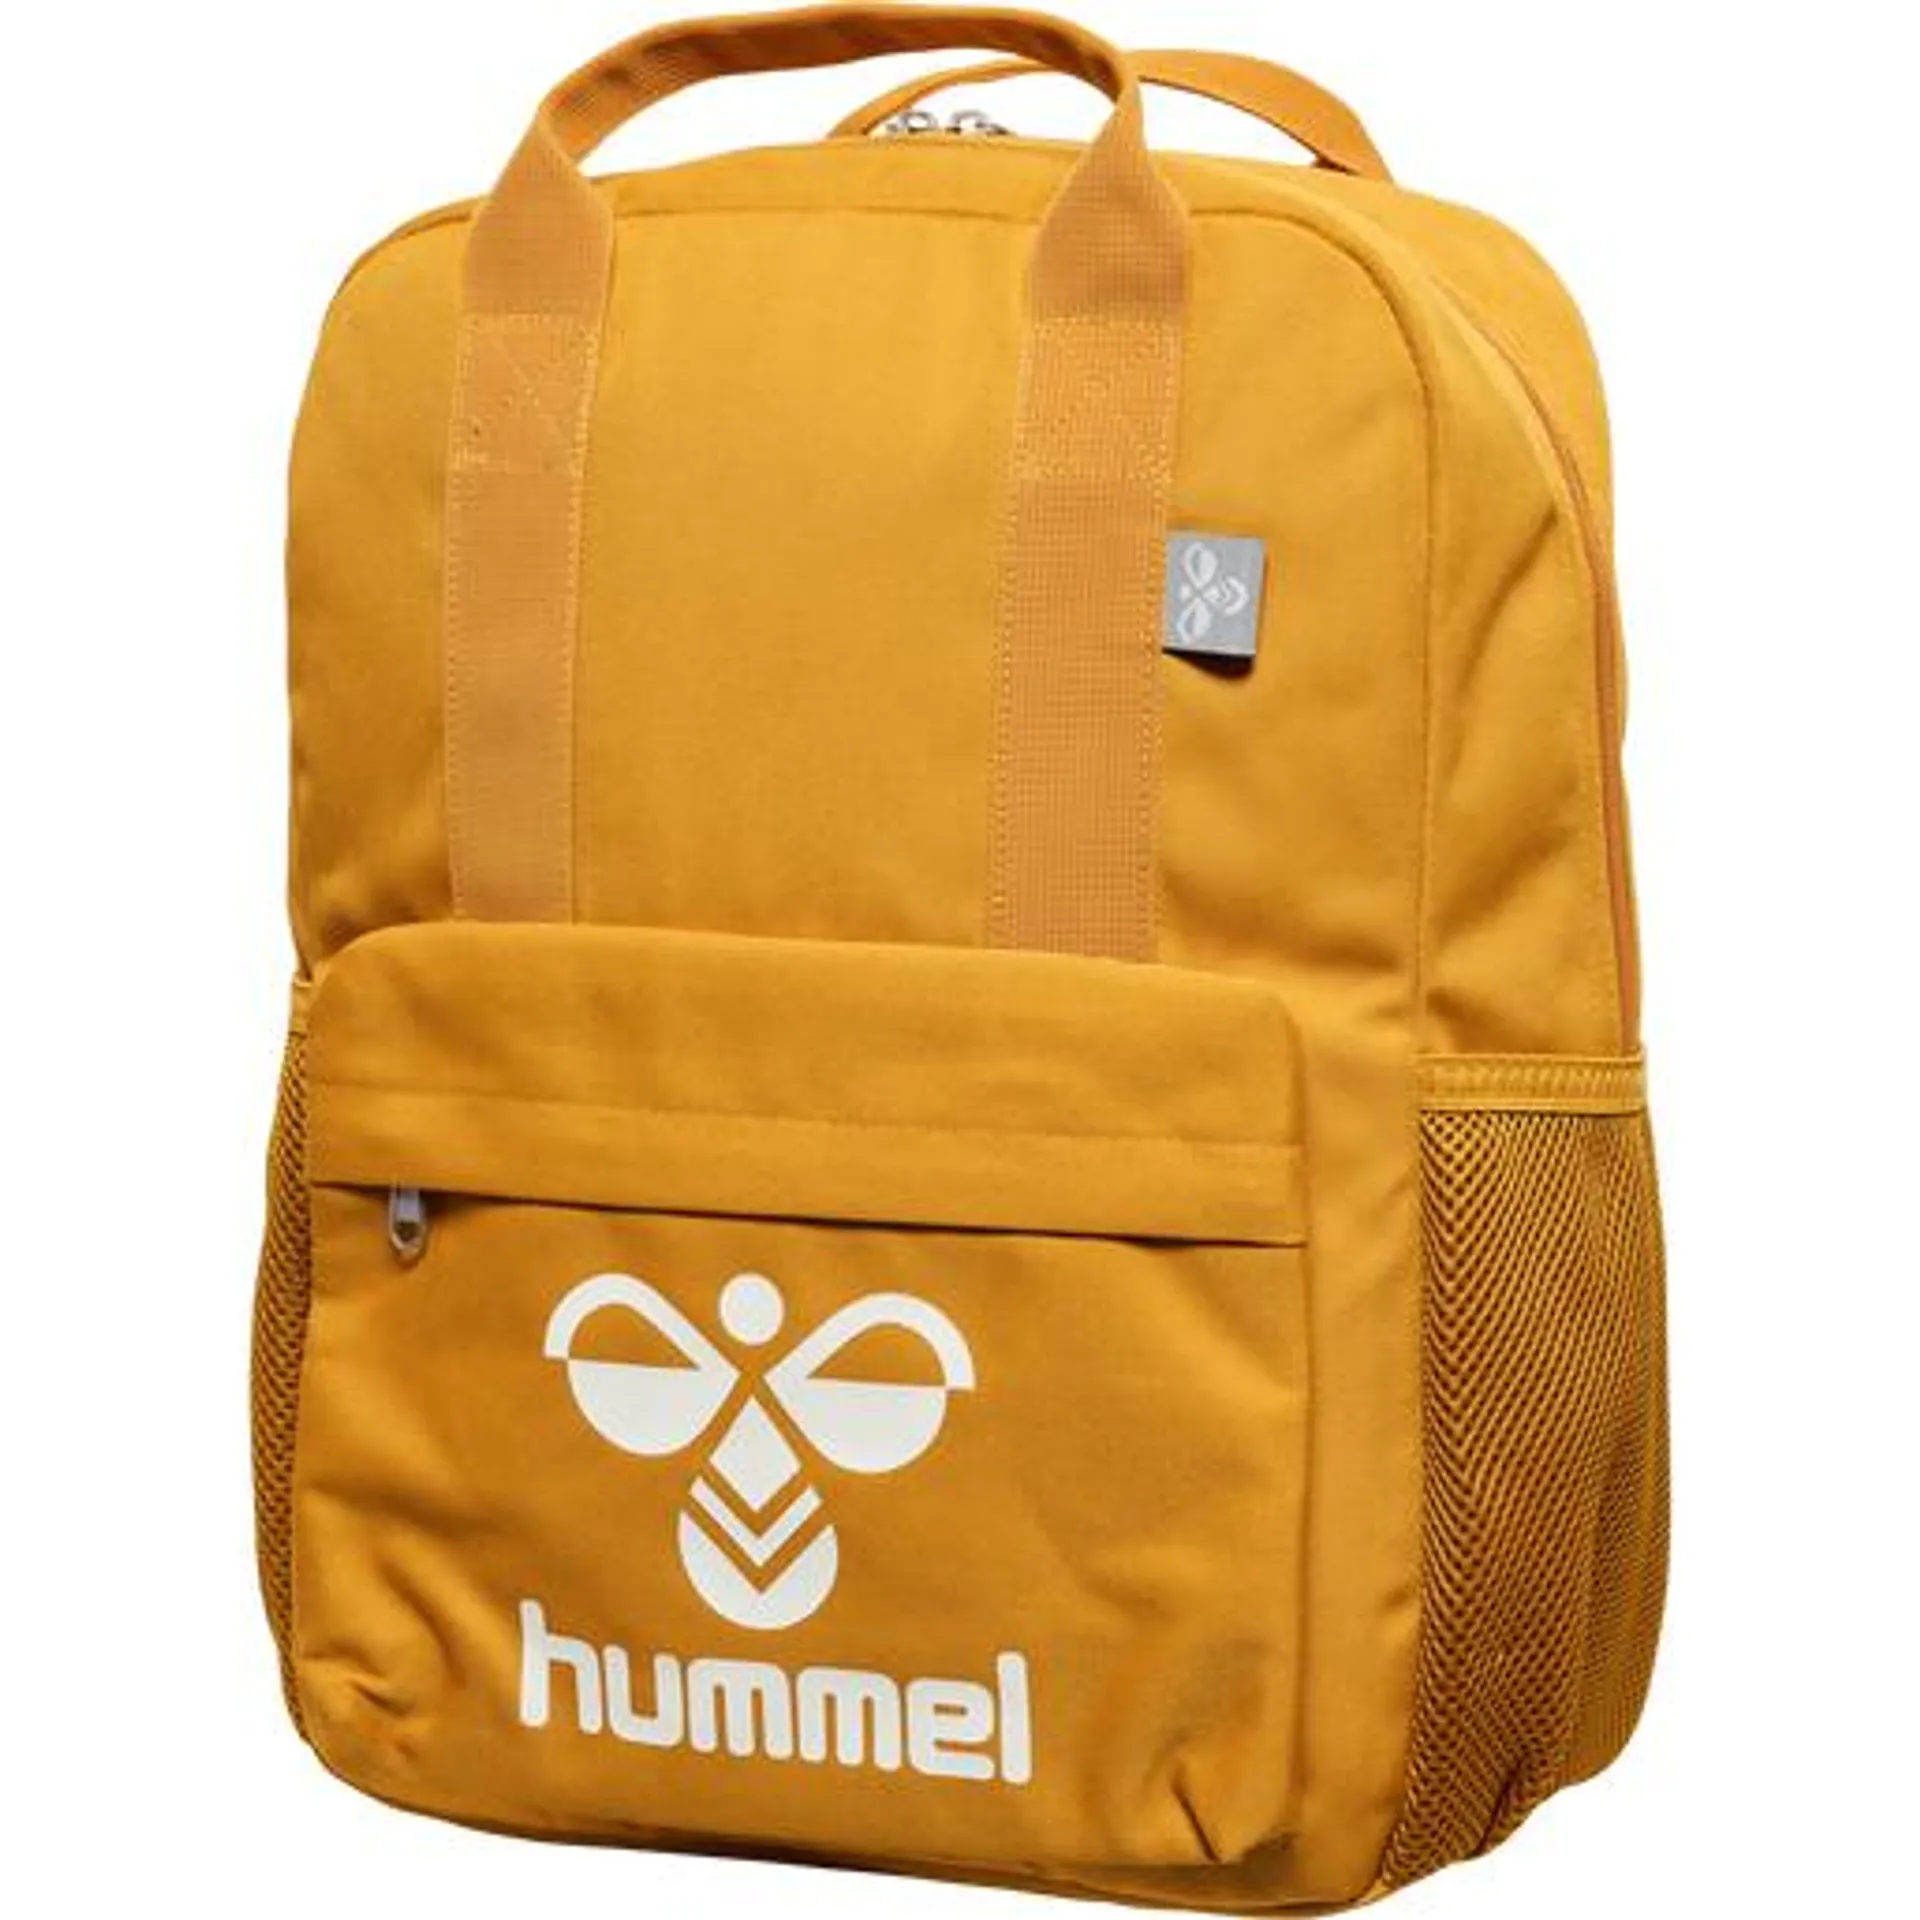 Backpack with padded shoulder straps